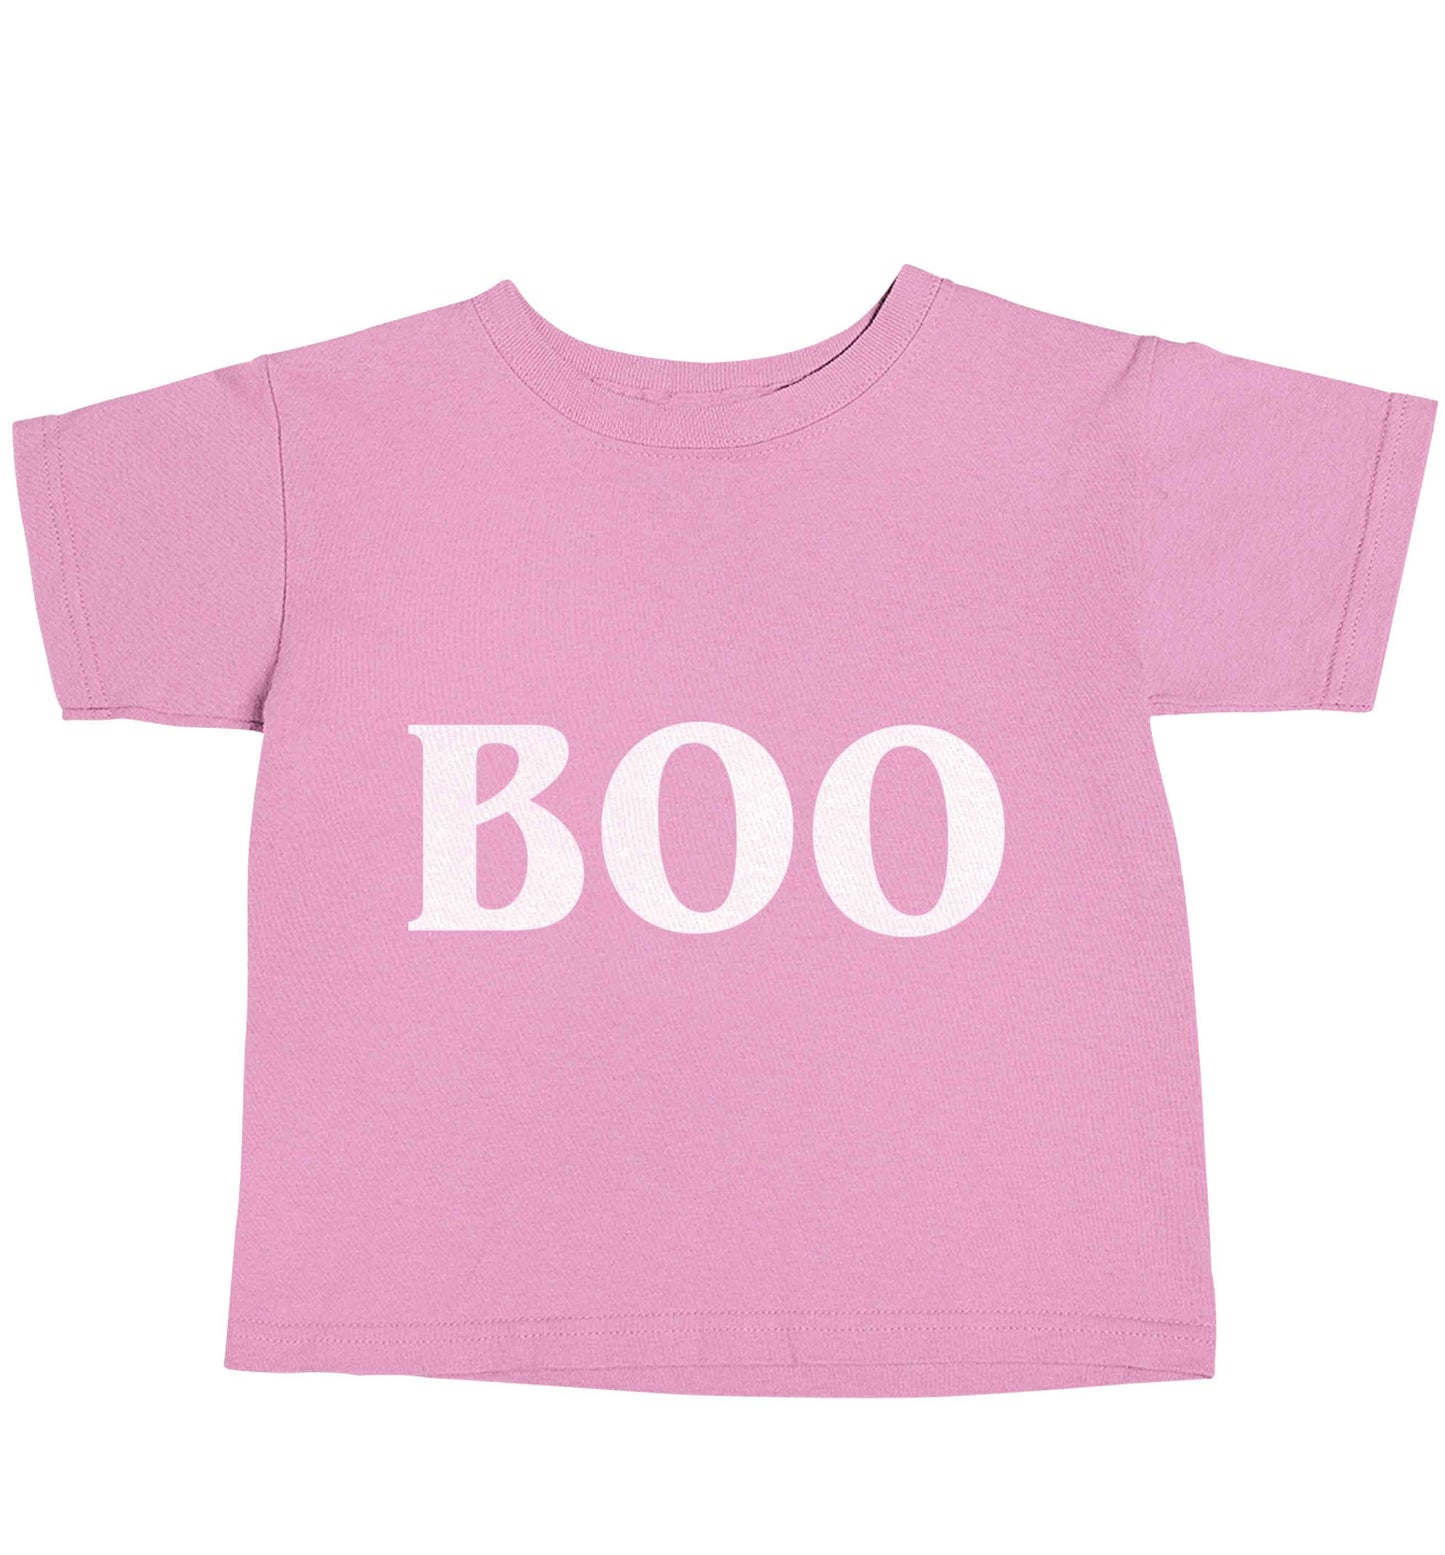 Boo light pink baby toddler Tshirt 2 Years